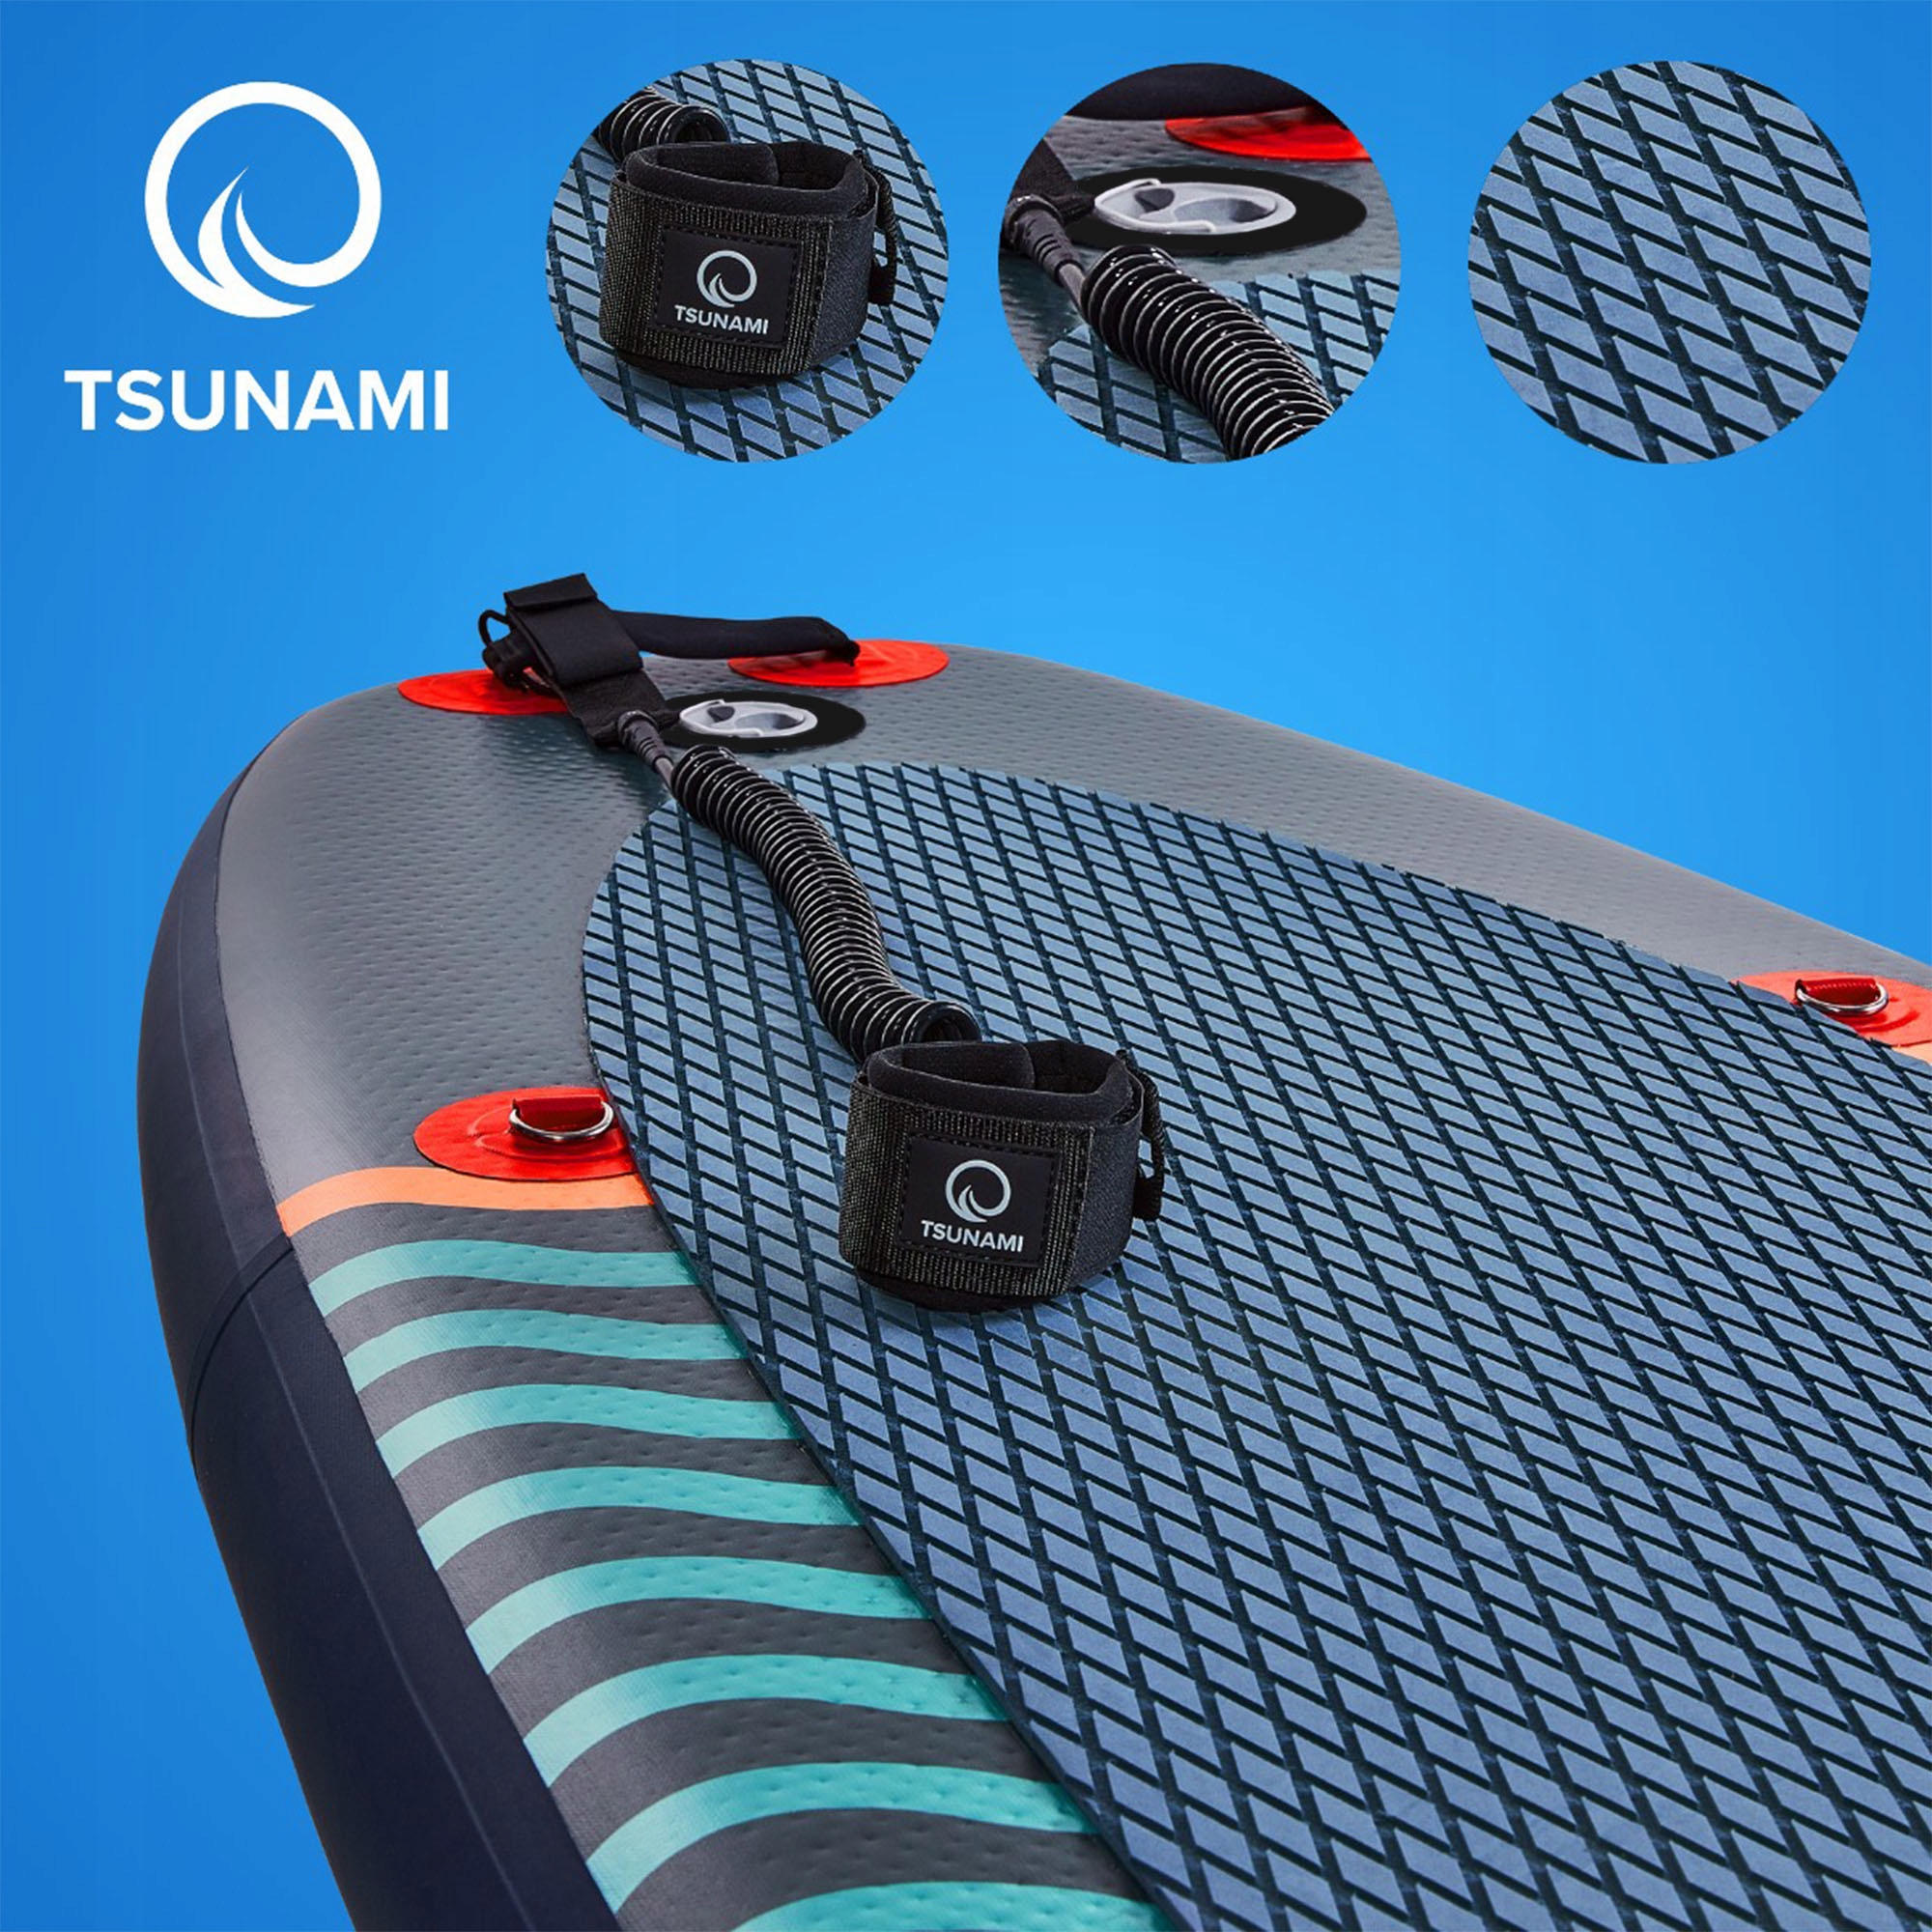 SUP доска TSUNAMI стоячее весло надувное 350см марки Tsunami